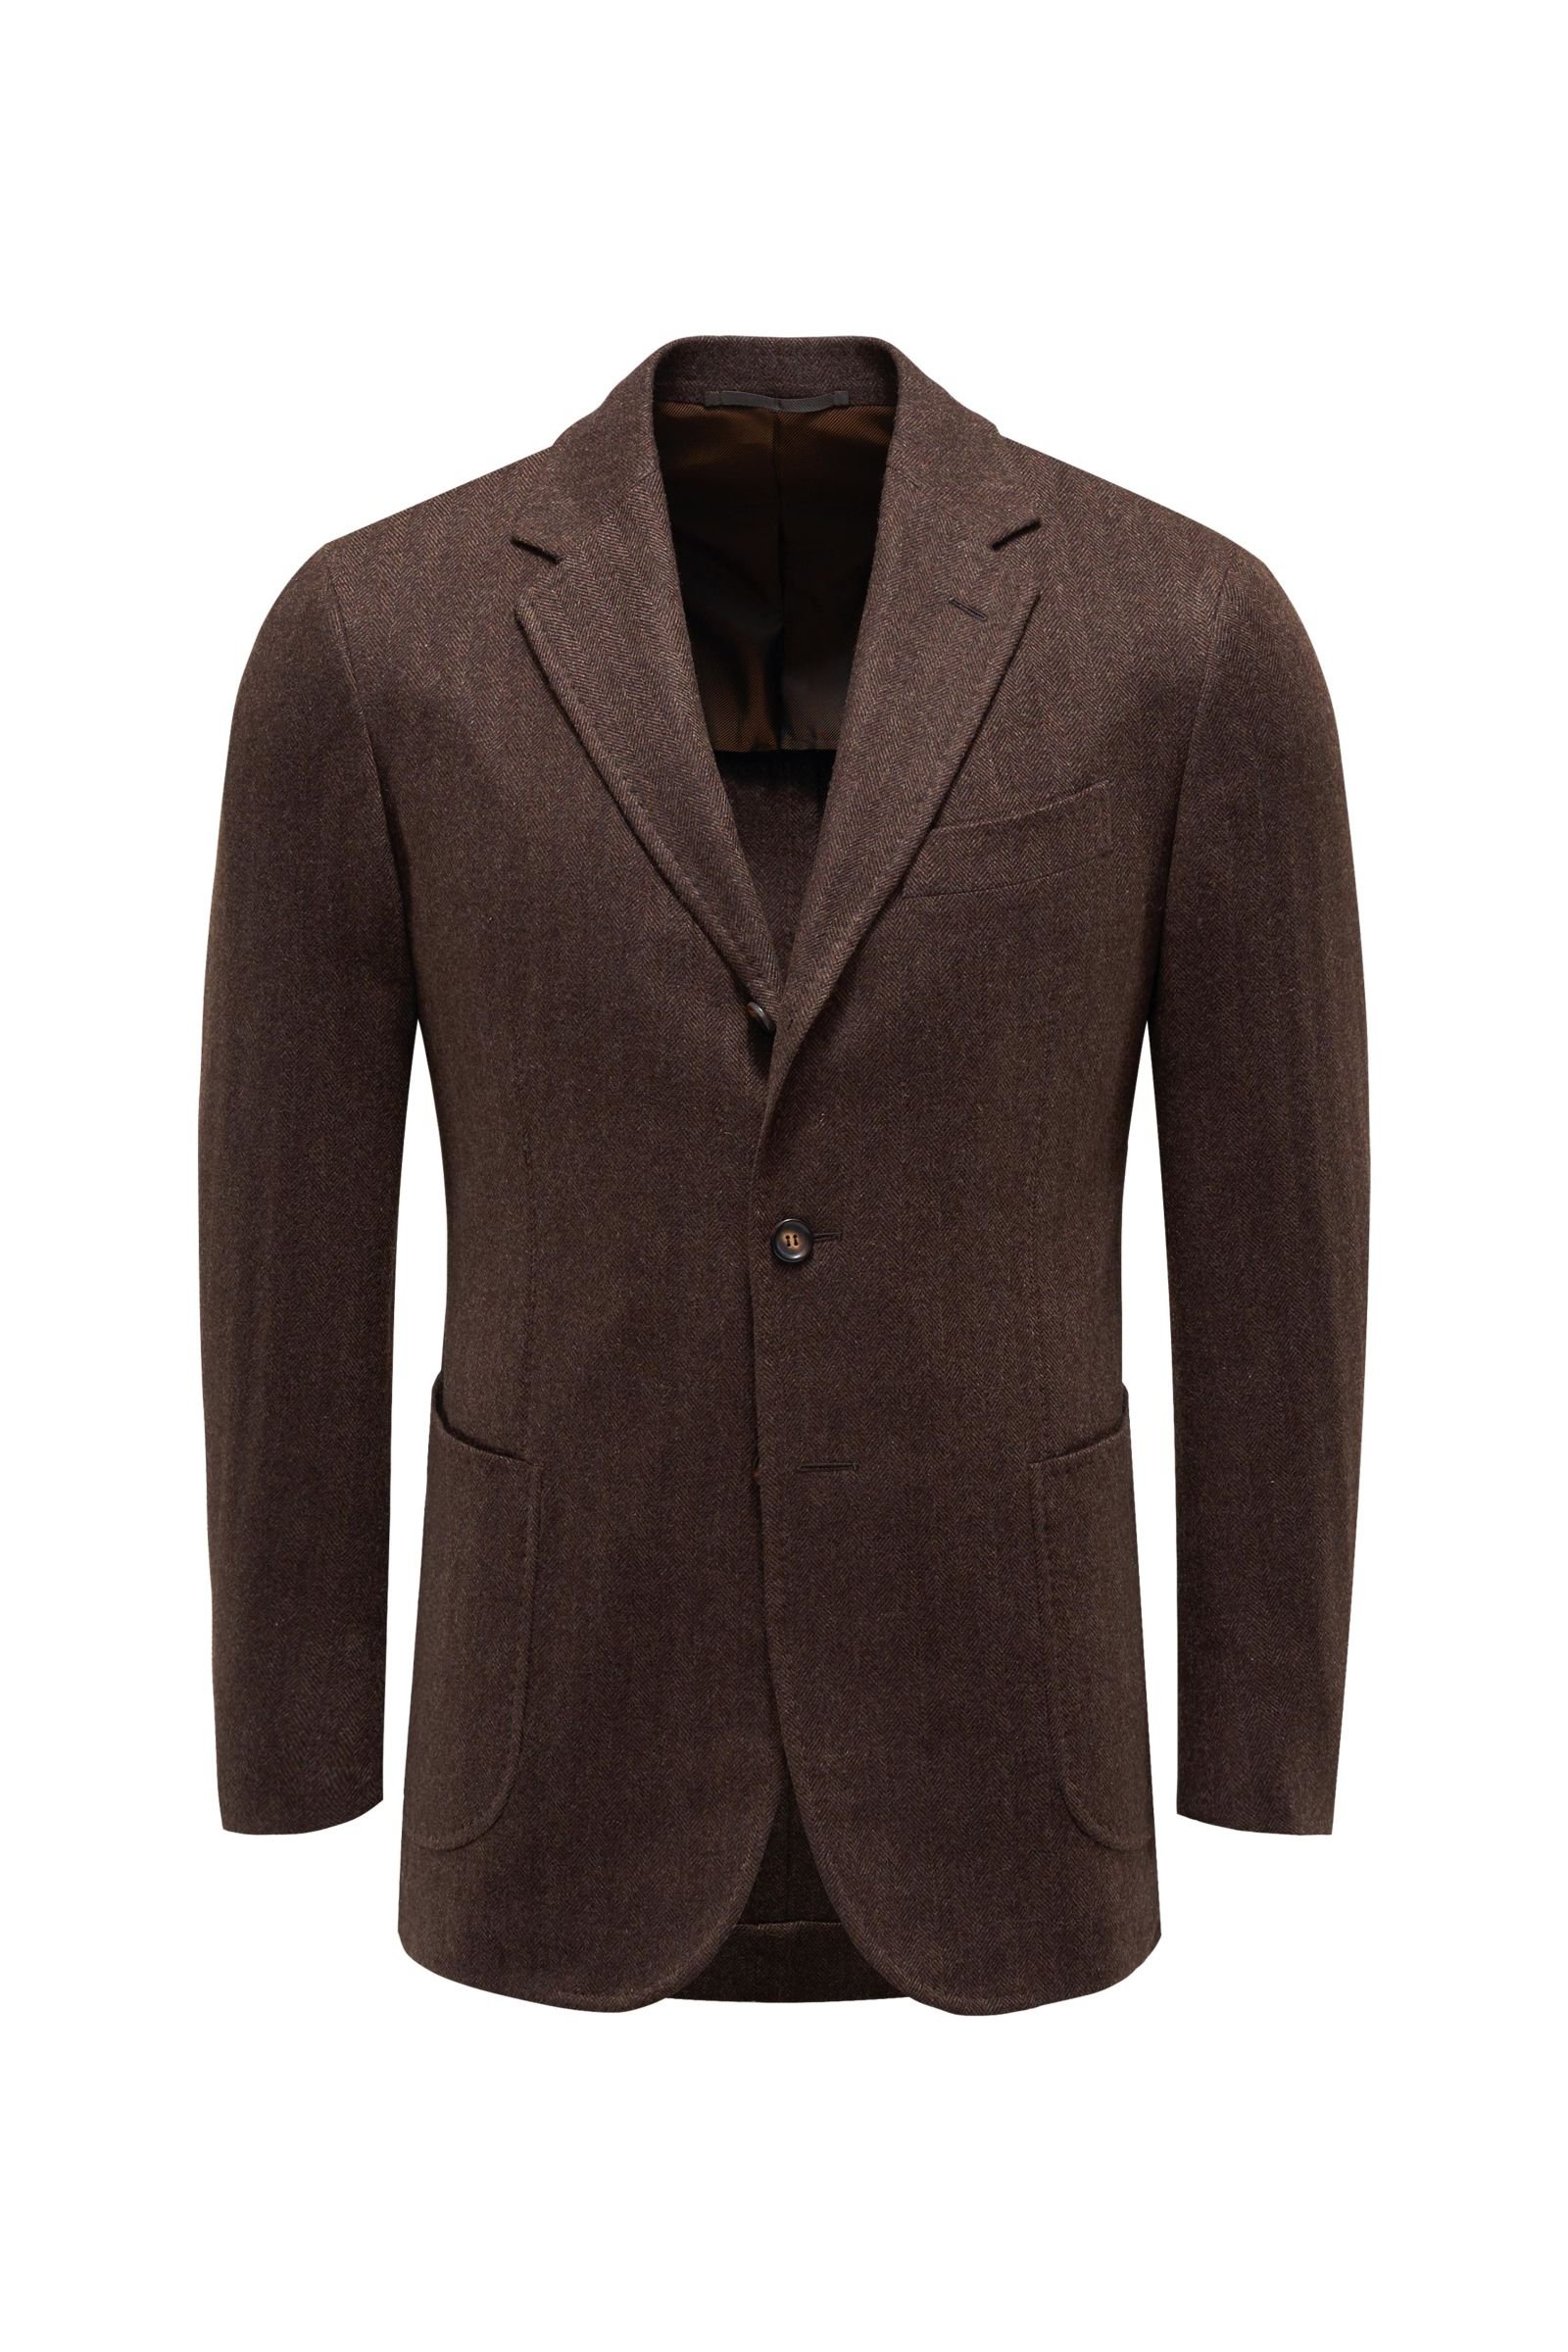 Cashmere smart-casual jacket 'Vincenzo' dark brown patterned